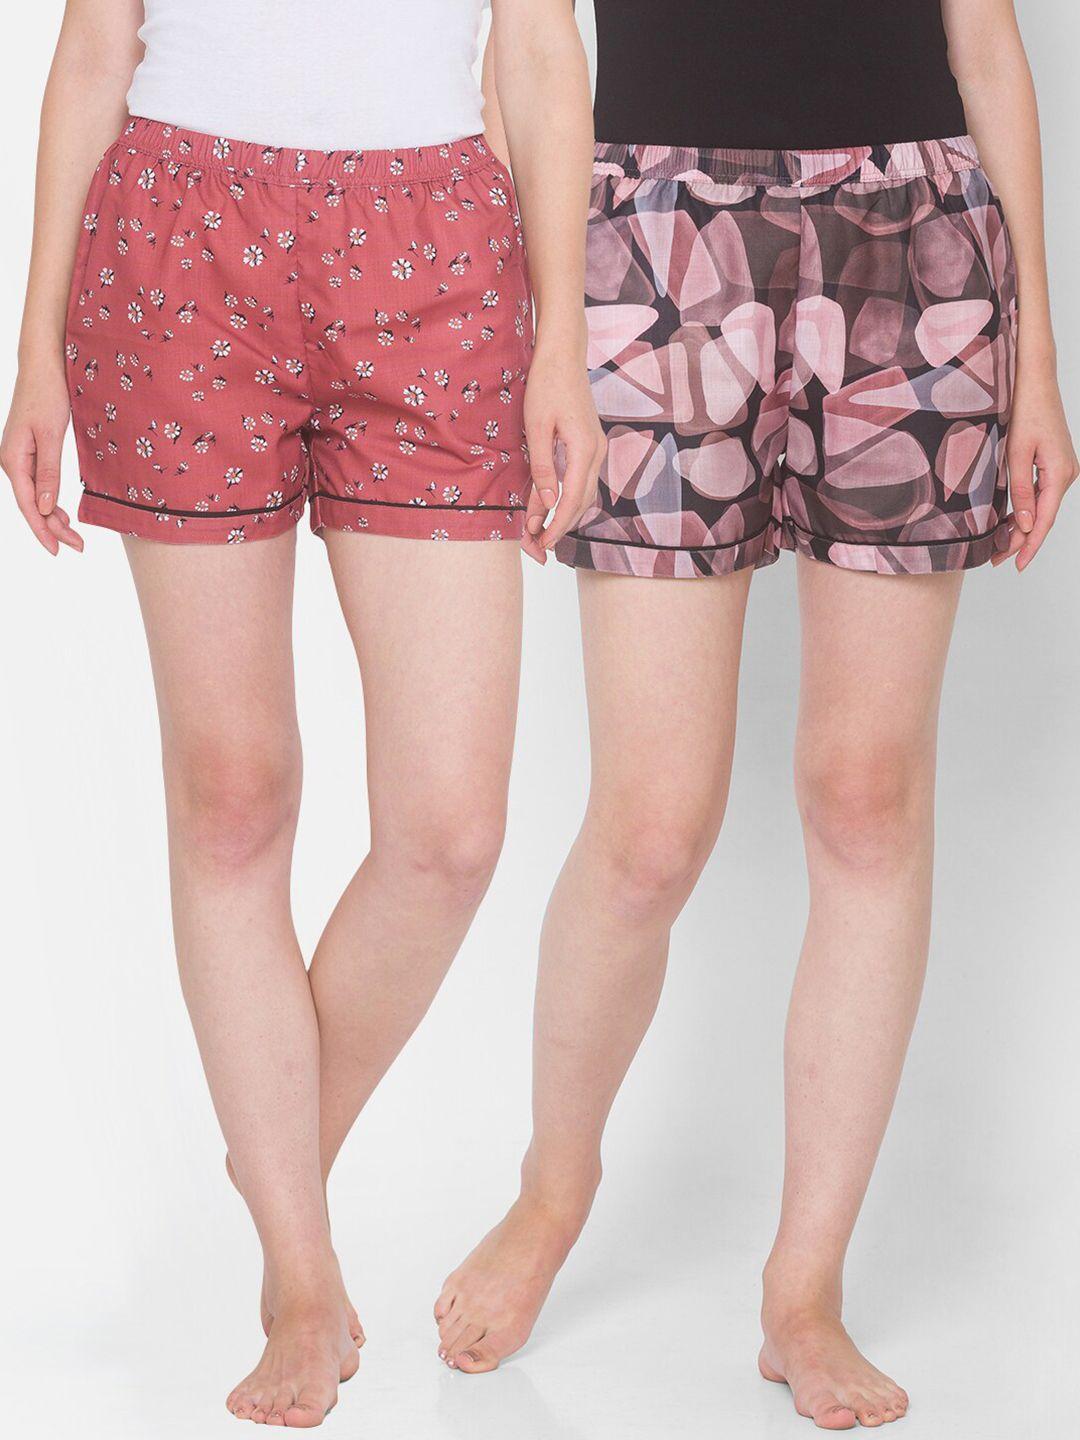 fashionrack-women-pack-of-2-printed-lounge-shorts